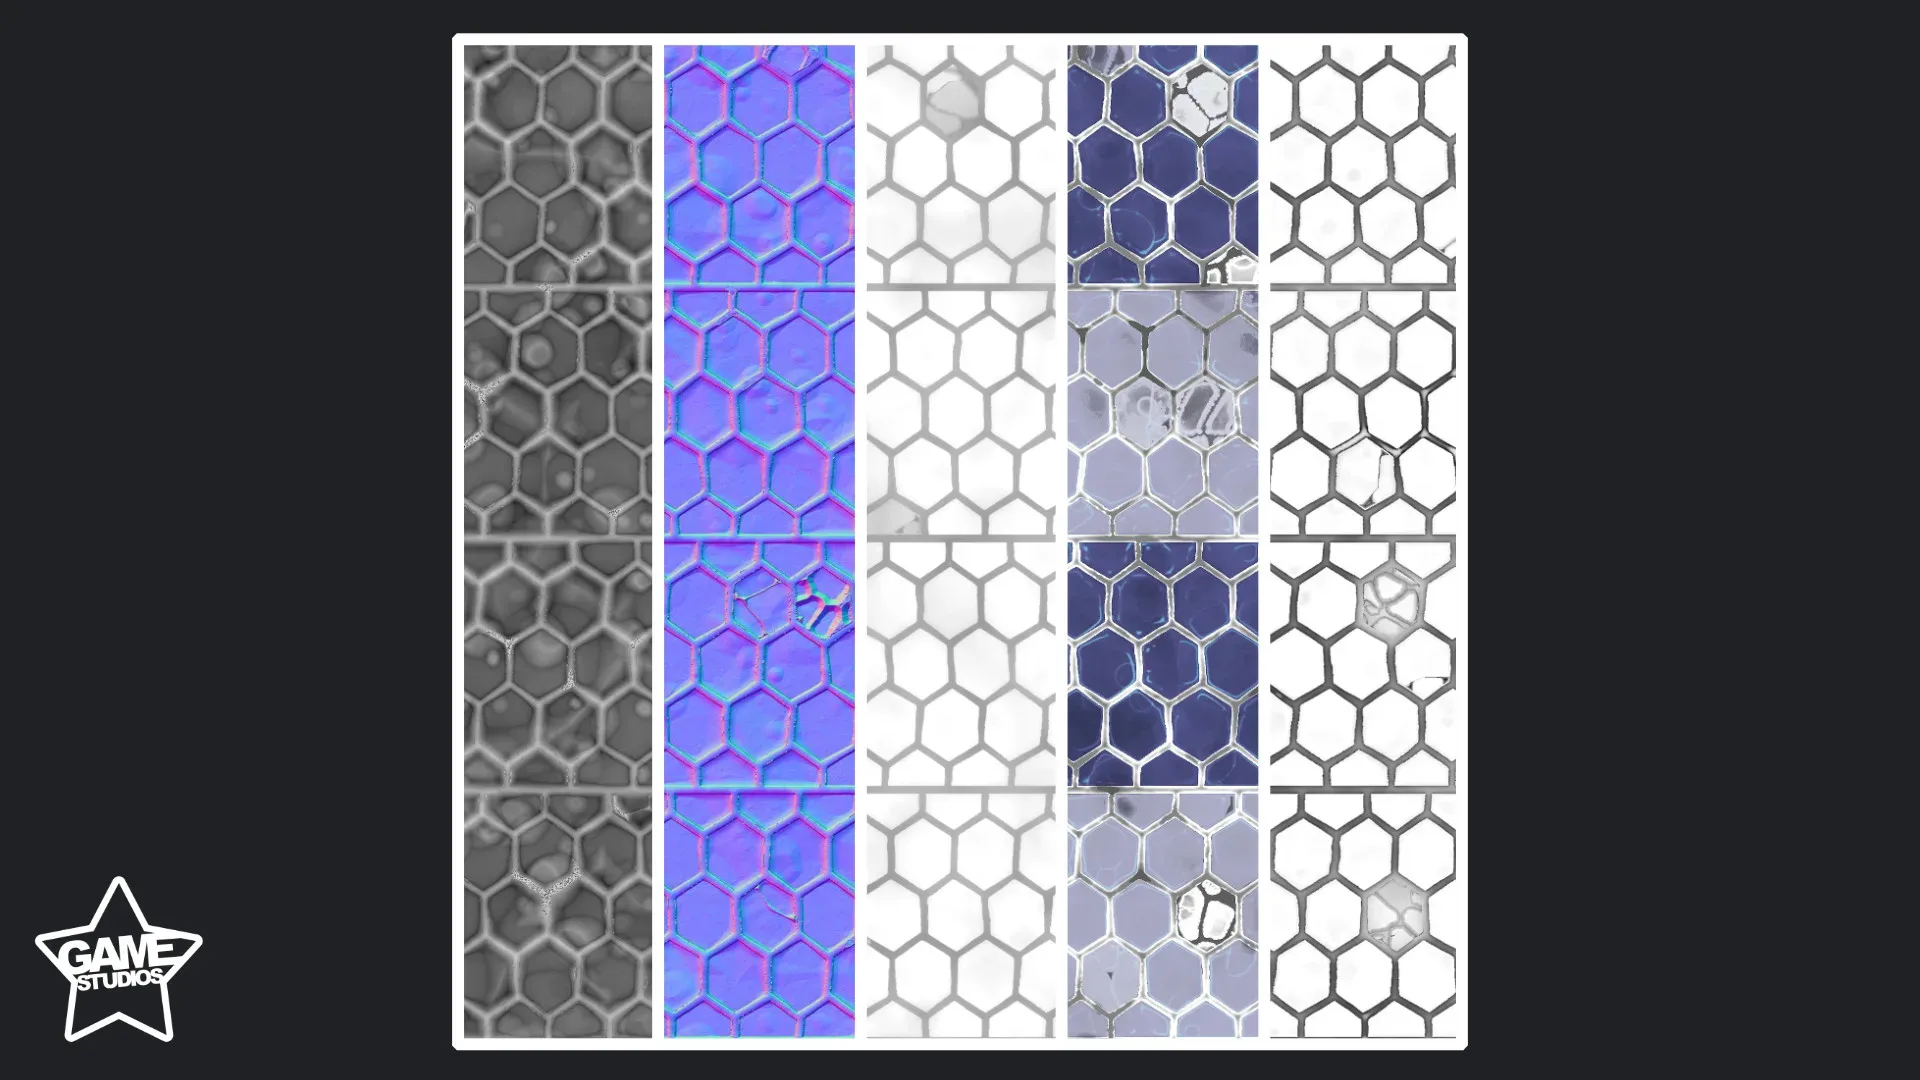 Stylized Portuguese Tiles Material 01 - Substance 3D Designer